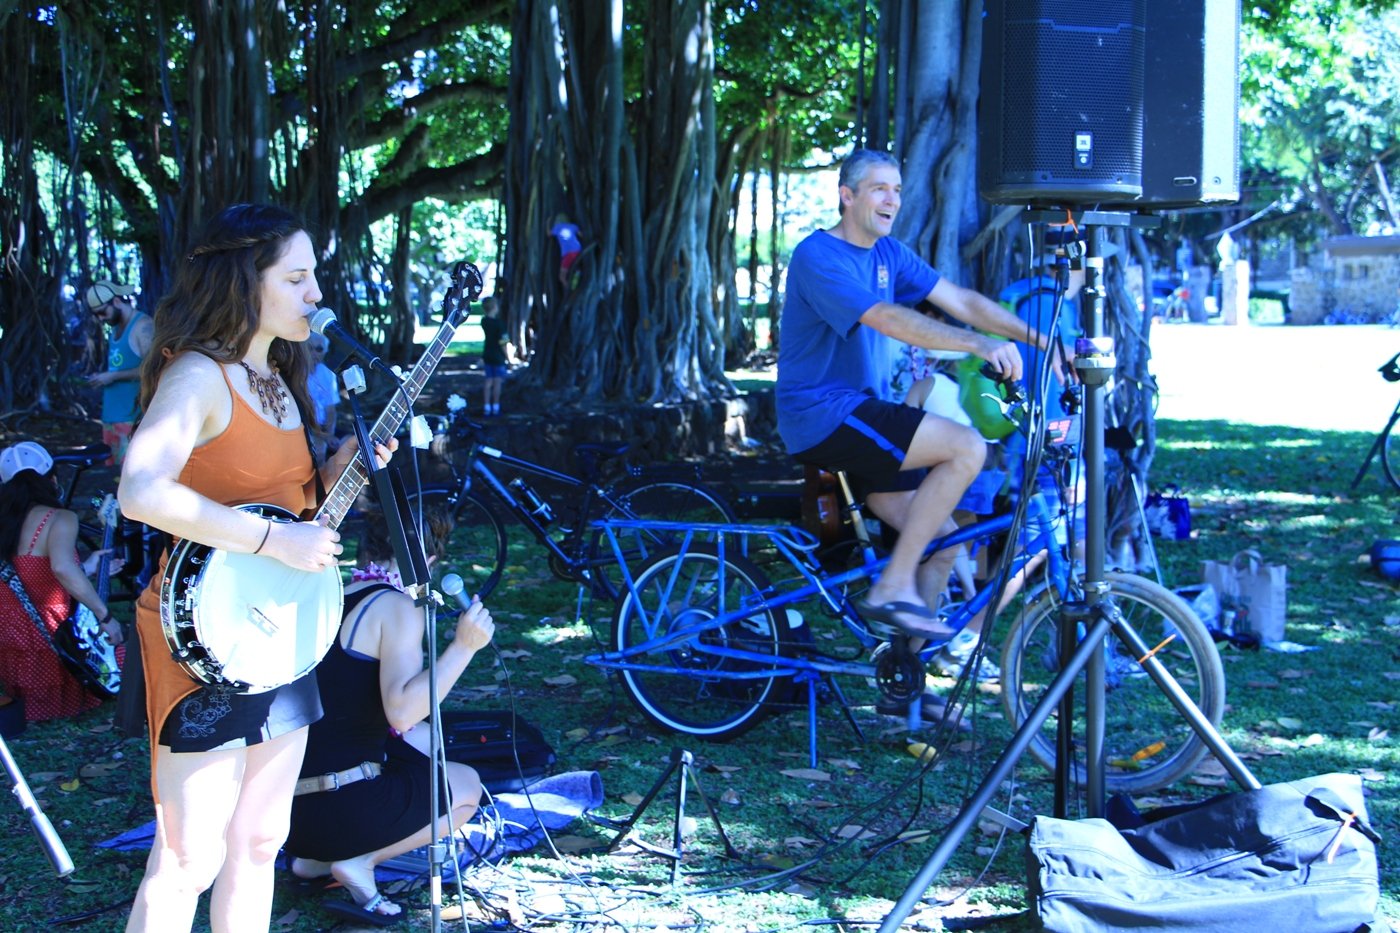 Pedal powered music. Photo by Amanda Stevens.